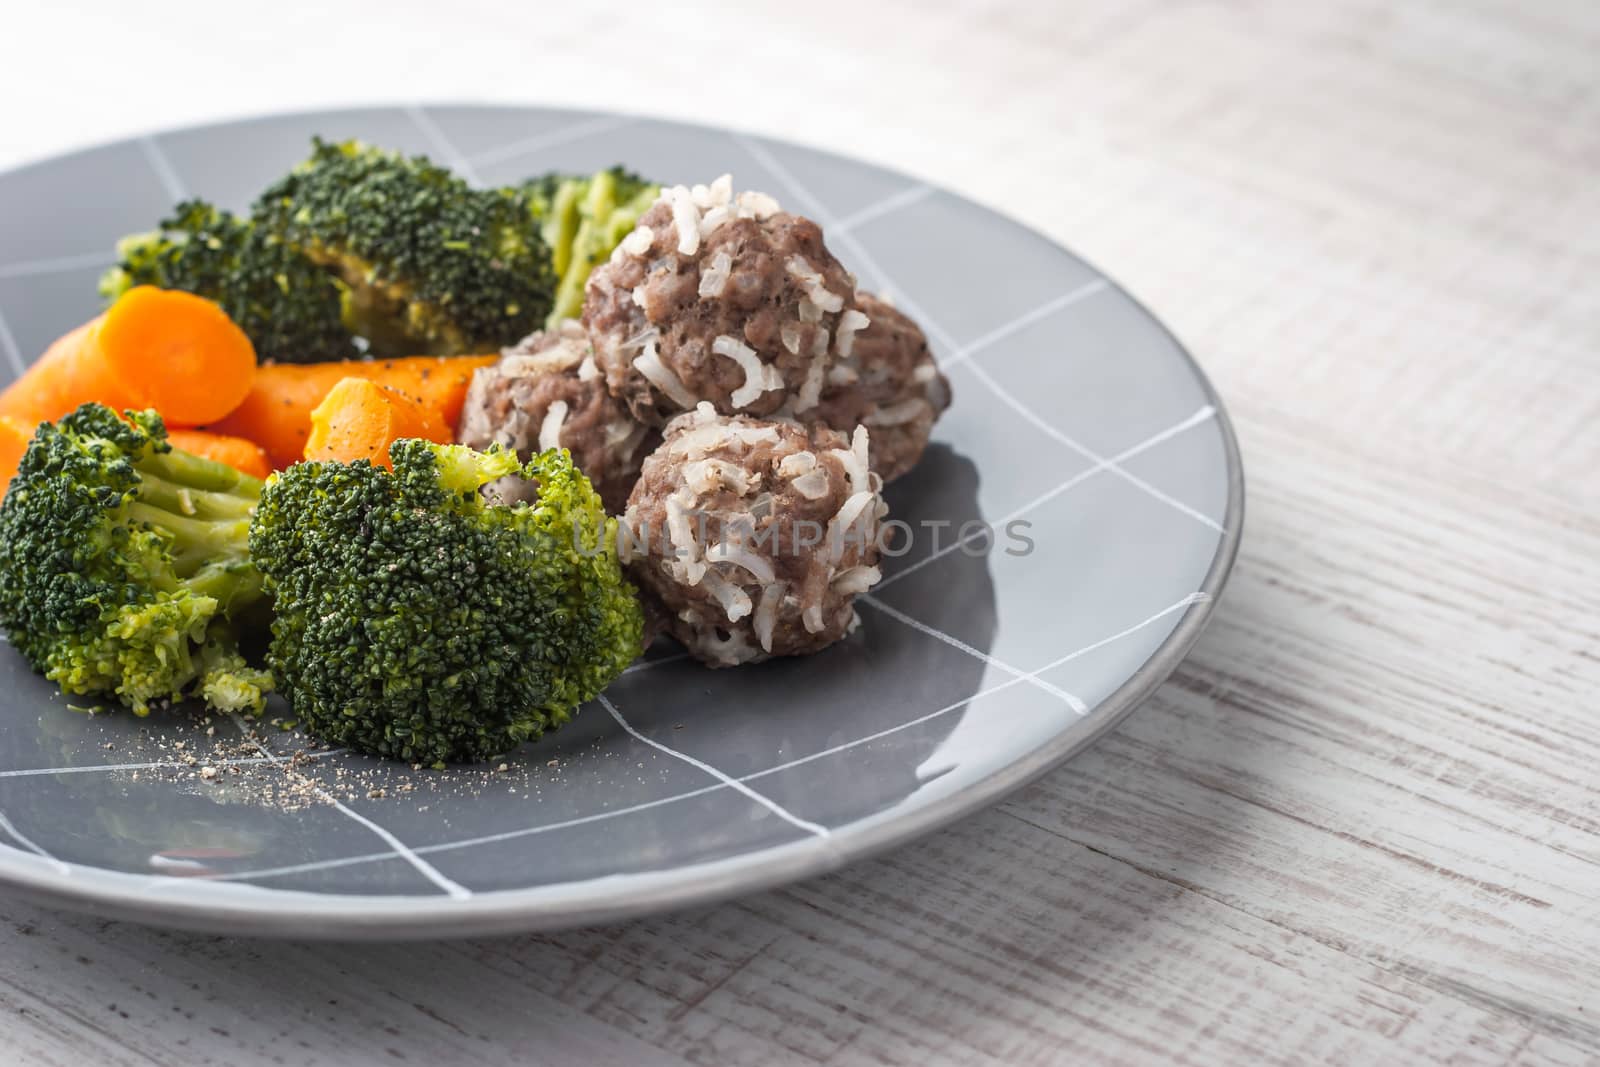 Steamed vegetables with meatballs by Deniskarpenkov